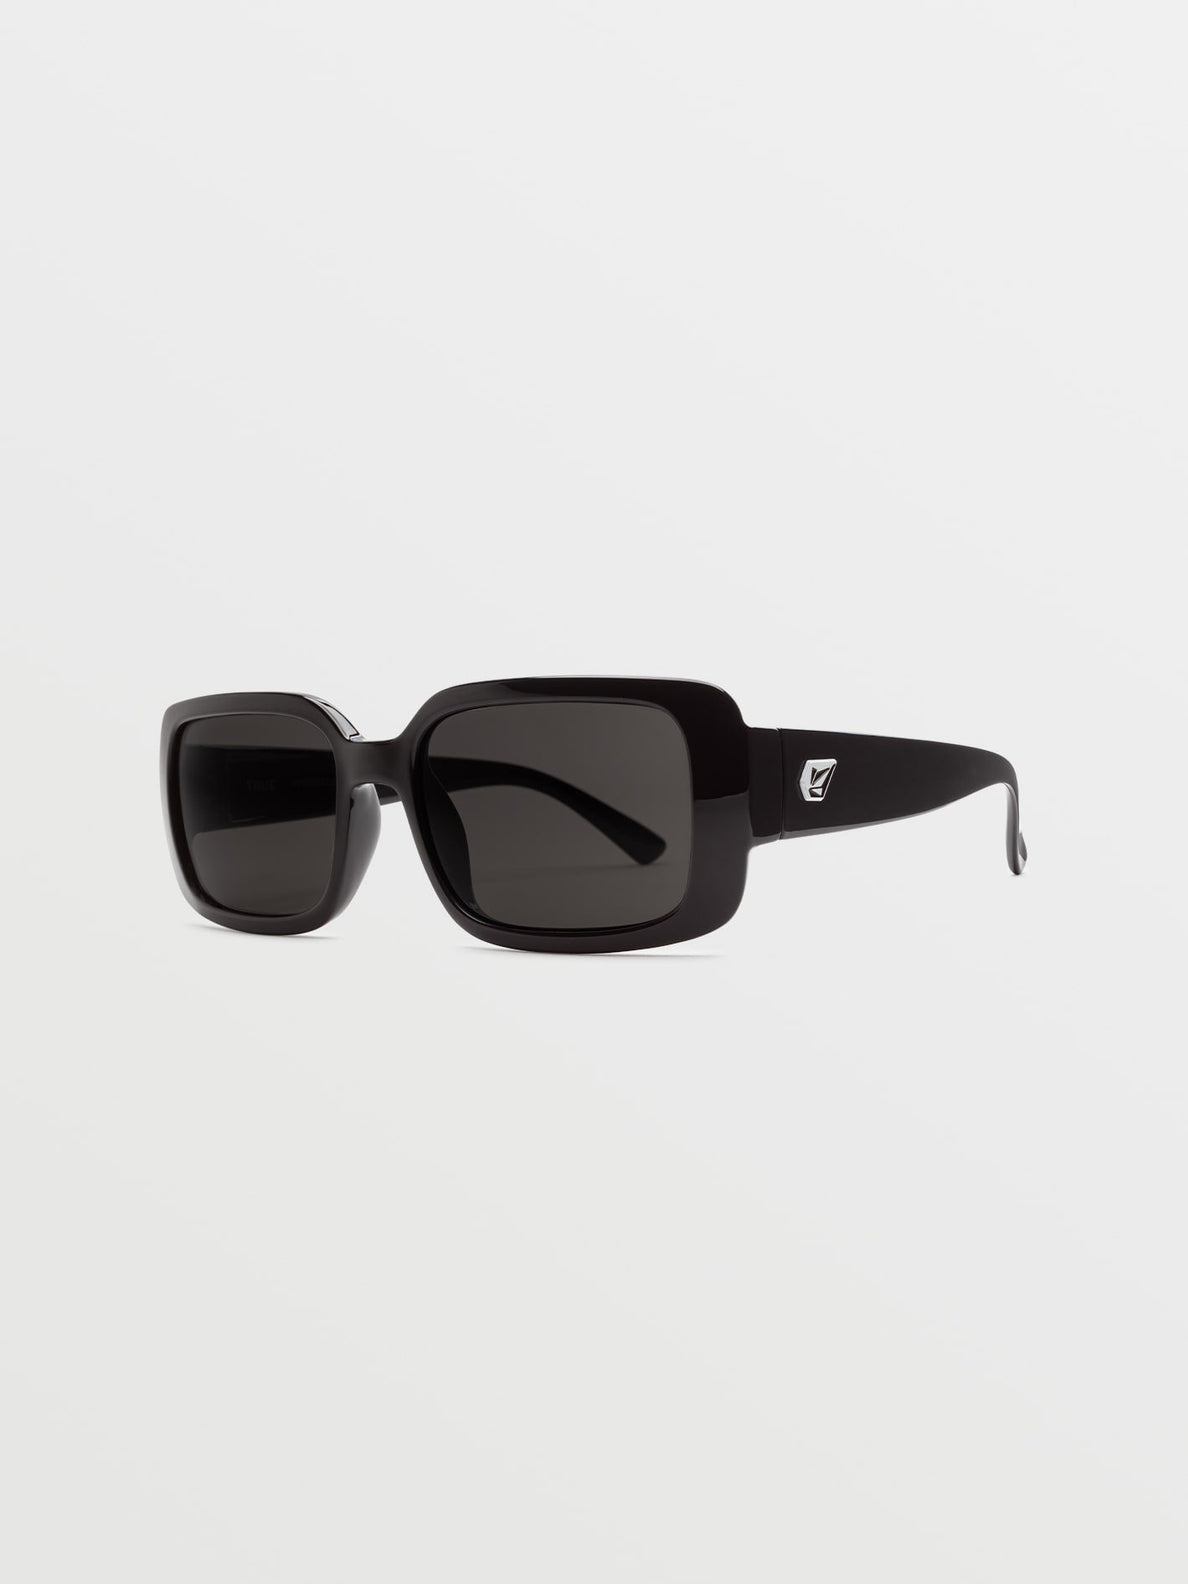 True Gloss Black Sunglasses (Gray Lens) - GRAY (VE03300201_0000) [F]